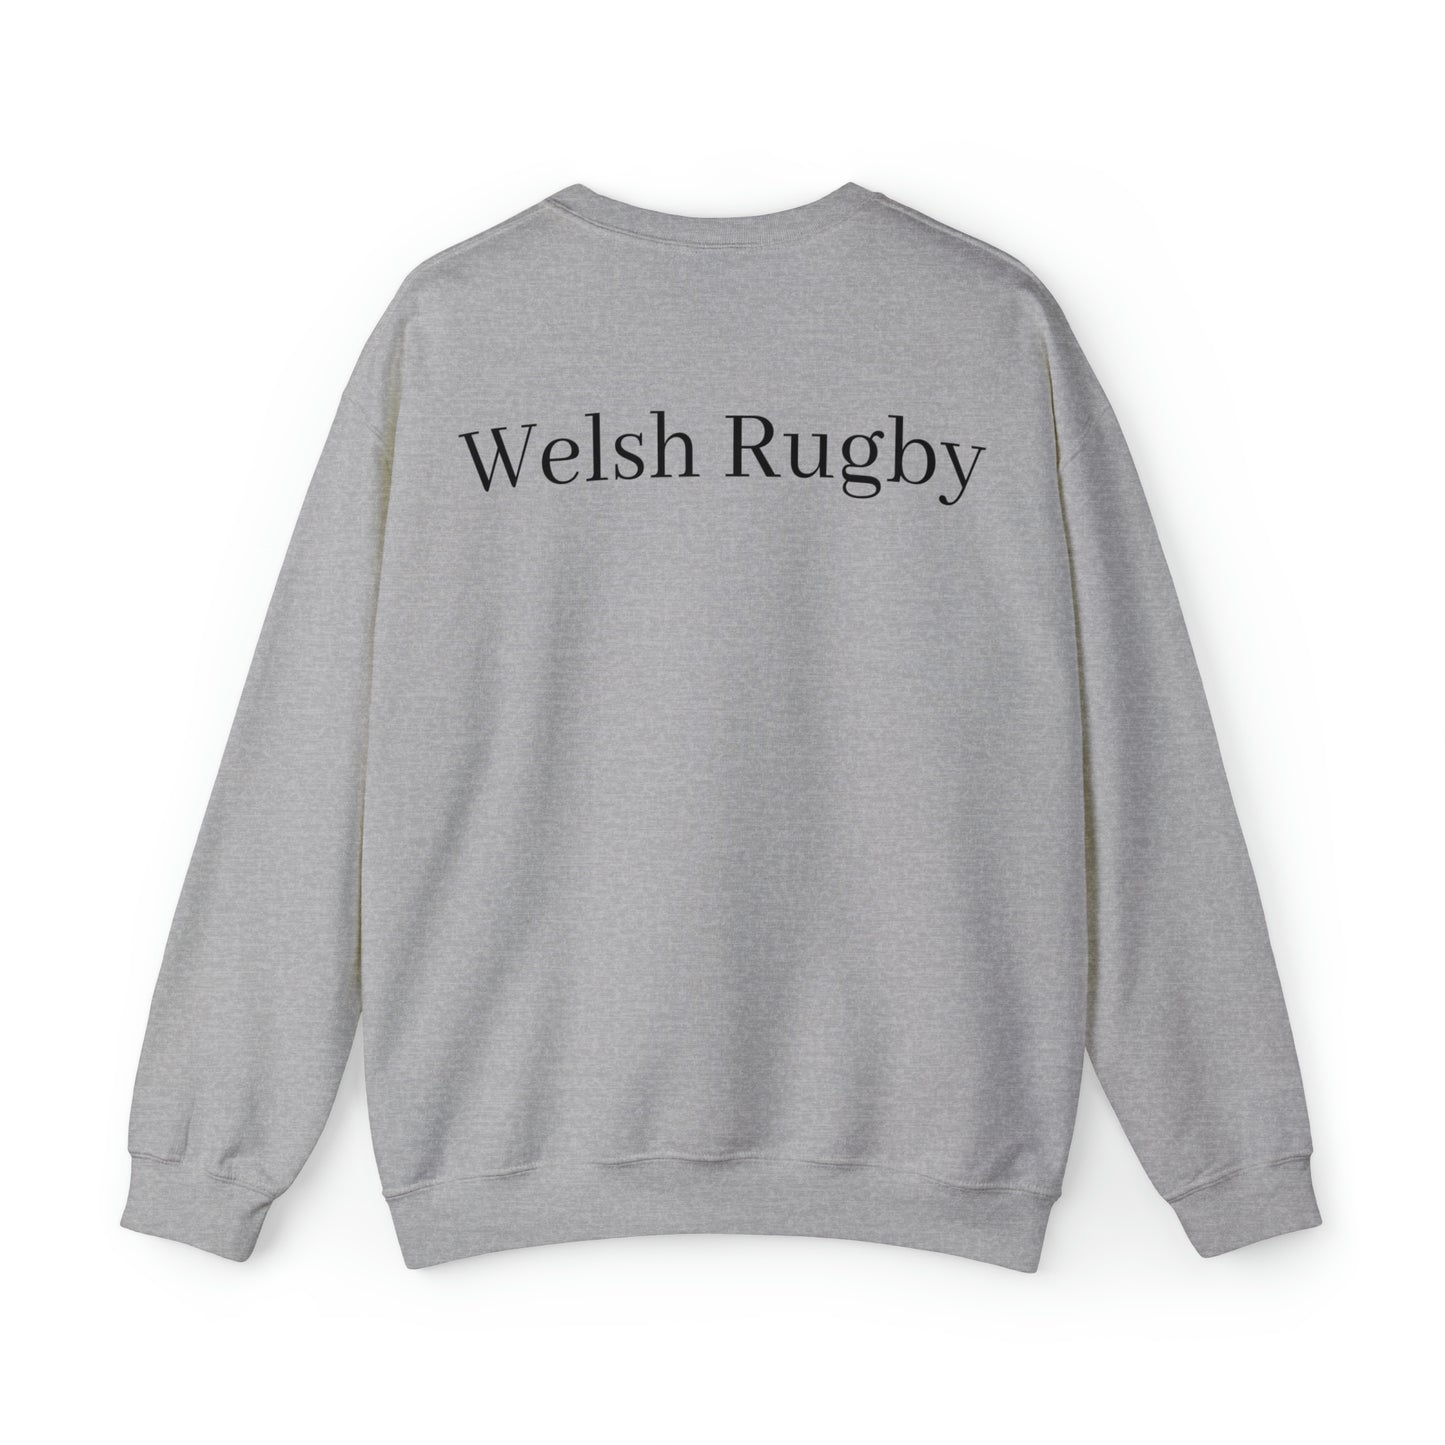 Wales Celebrating - light sweatshirts